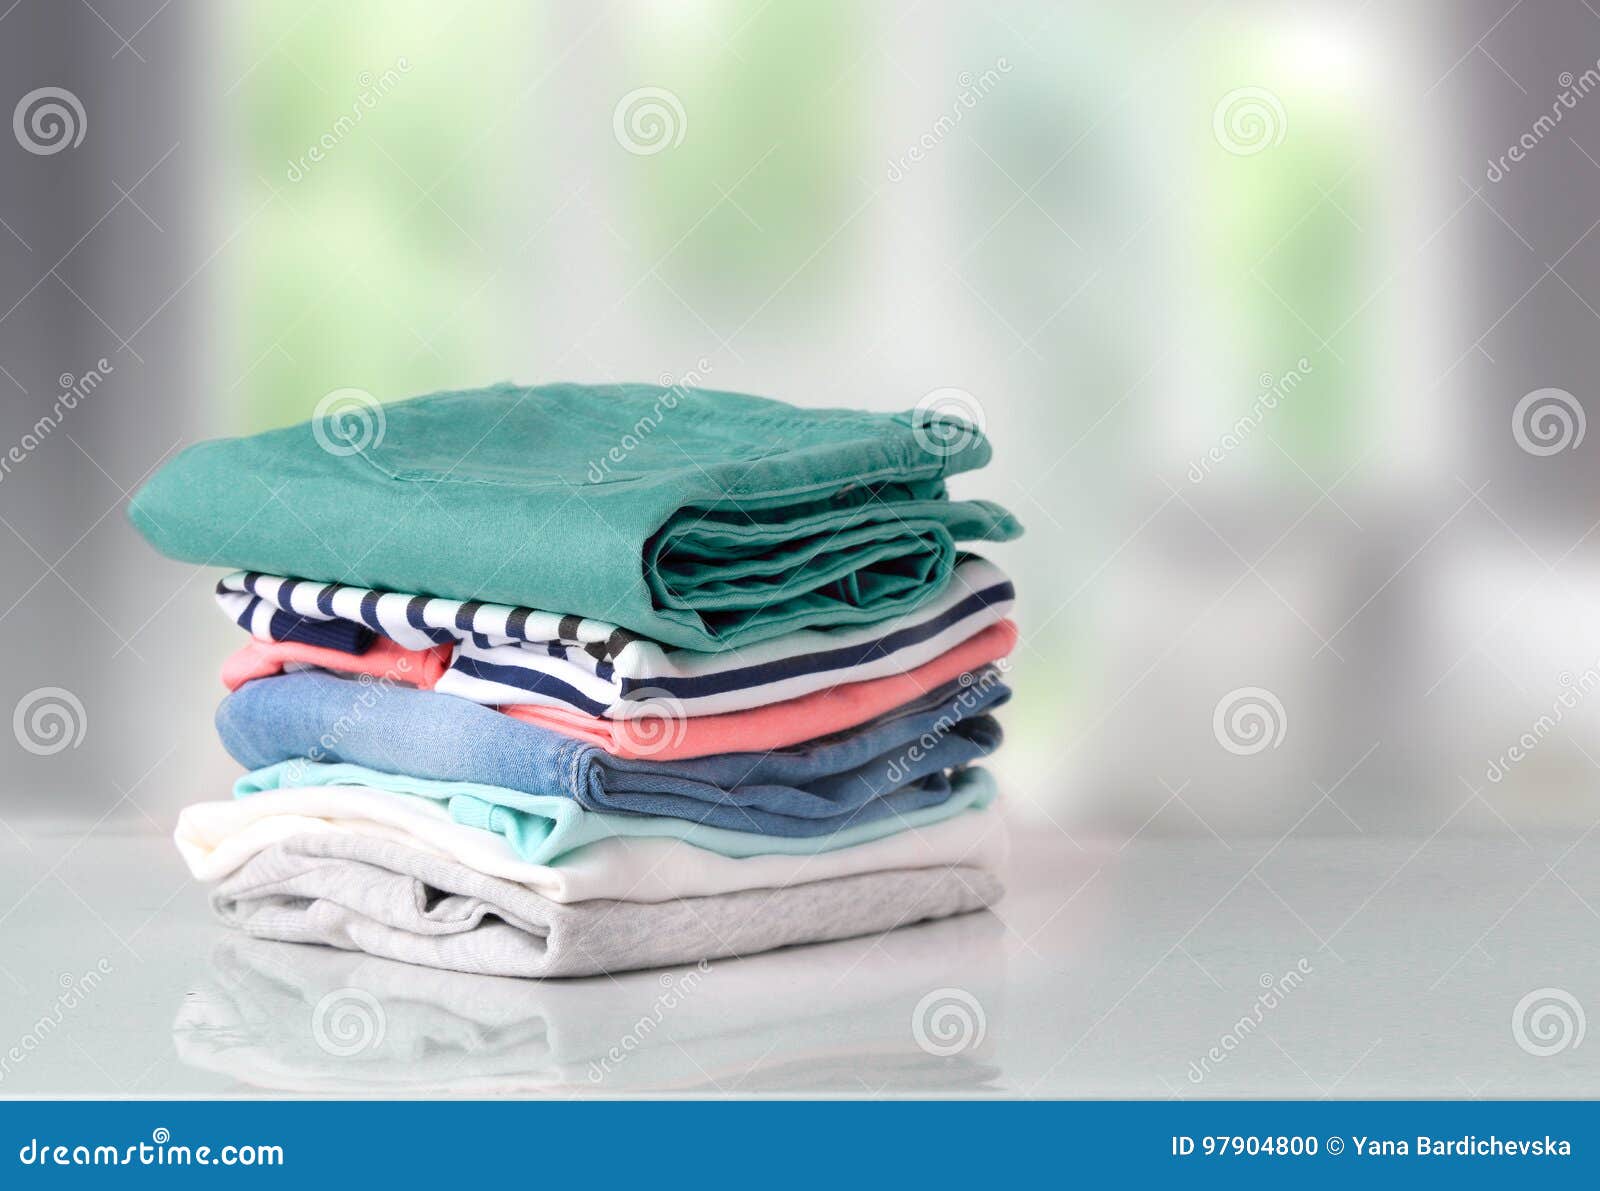 images of cotton clothes